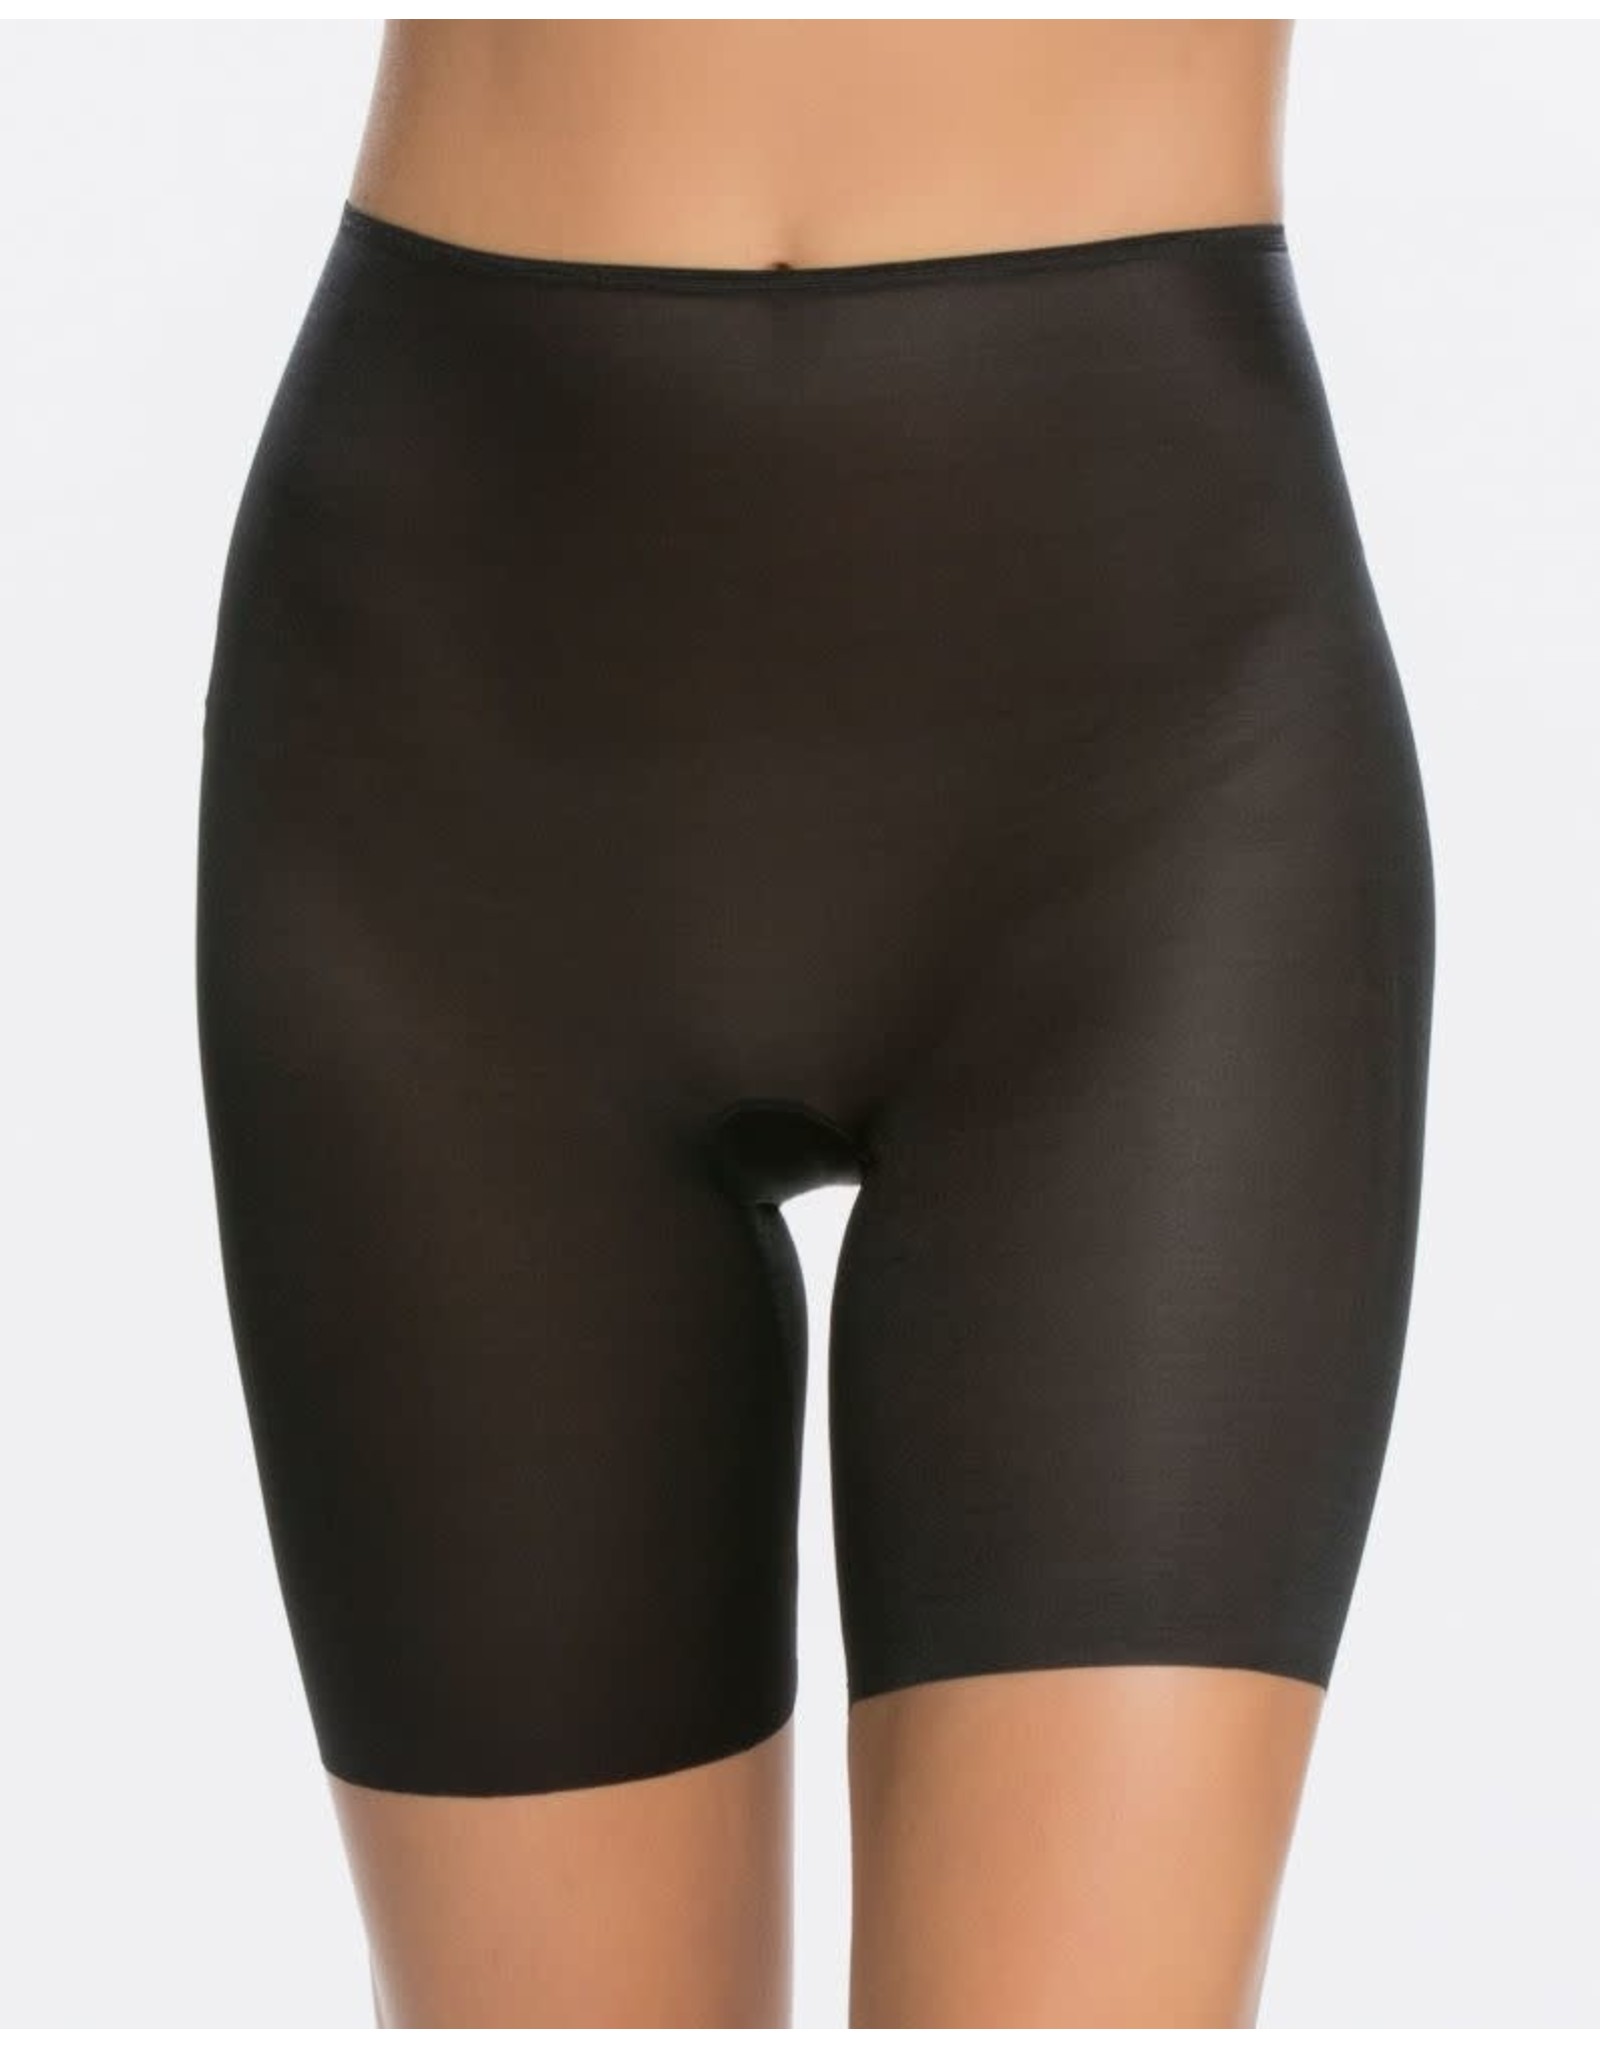 https://cdn.shoplightspeed.com/shops/635781/files/26980115/1600x2048x2/spanx-spanx-mid-thigh-shorts-shapewear.jpg